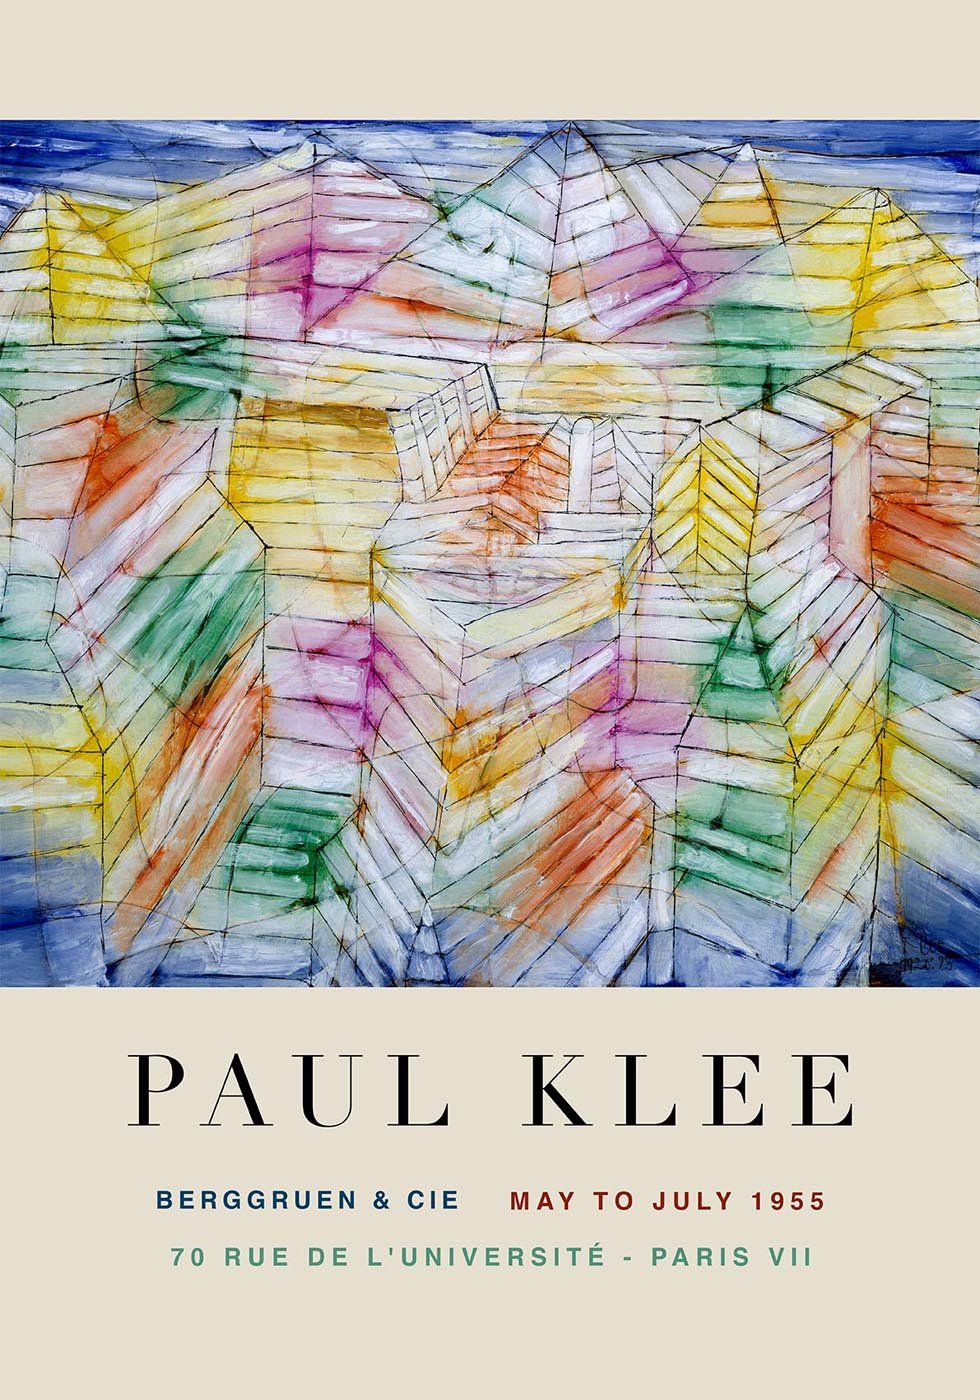 Paul Klee Theatre-Mountain-Construction Art Exhibition Poster